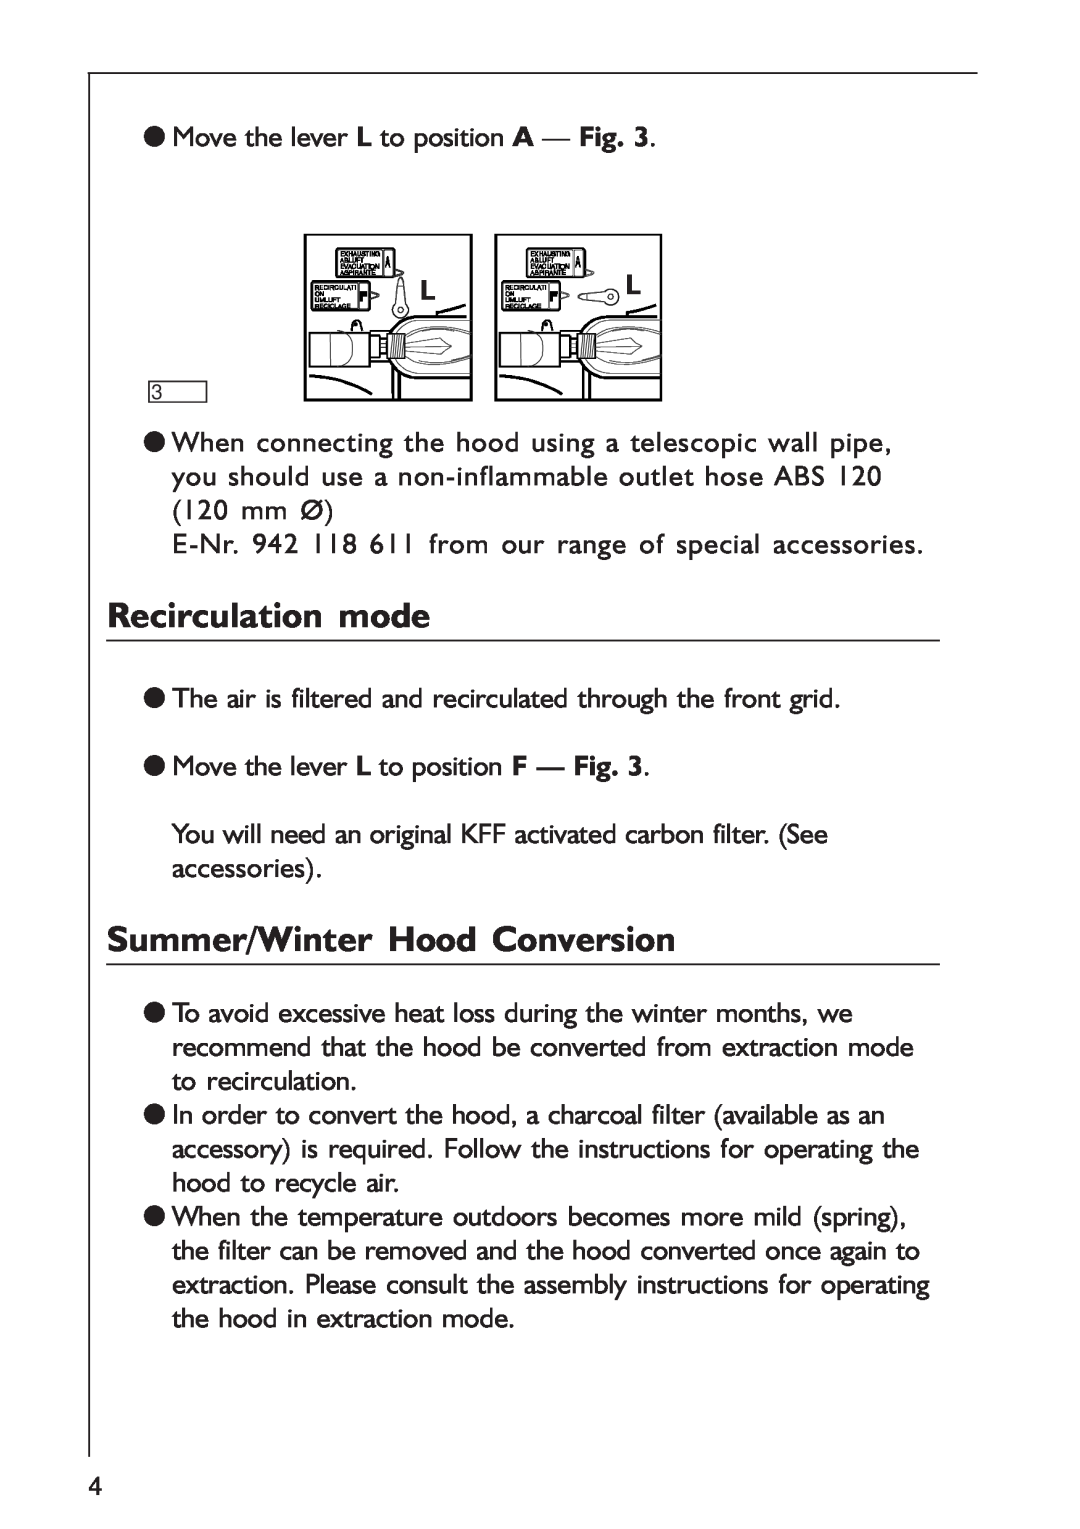 AEG 125 D manual Recirculation mode, Summer/Winter Hood Conversion 